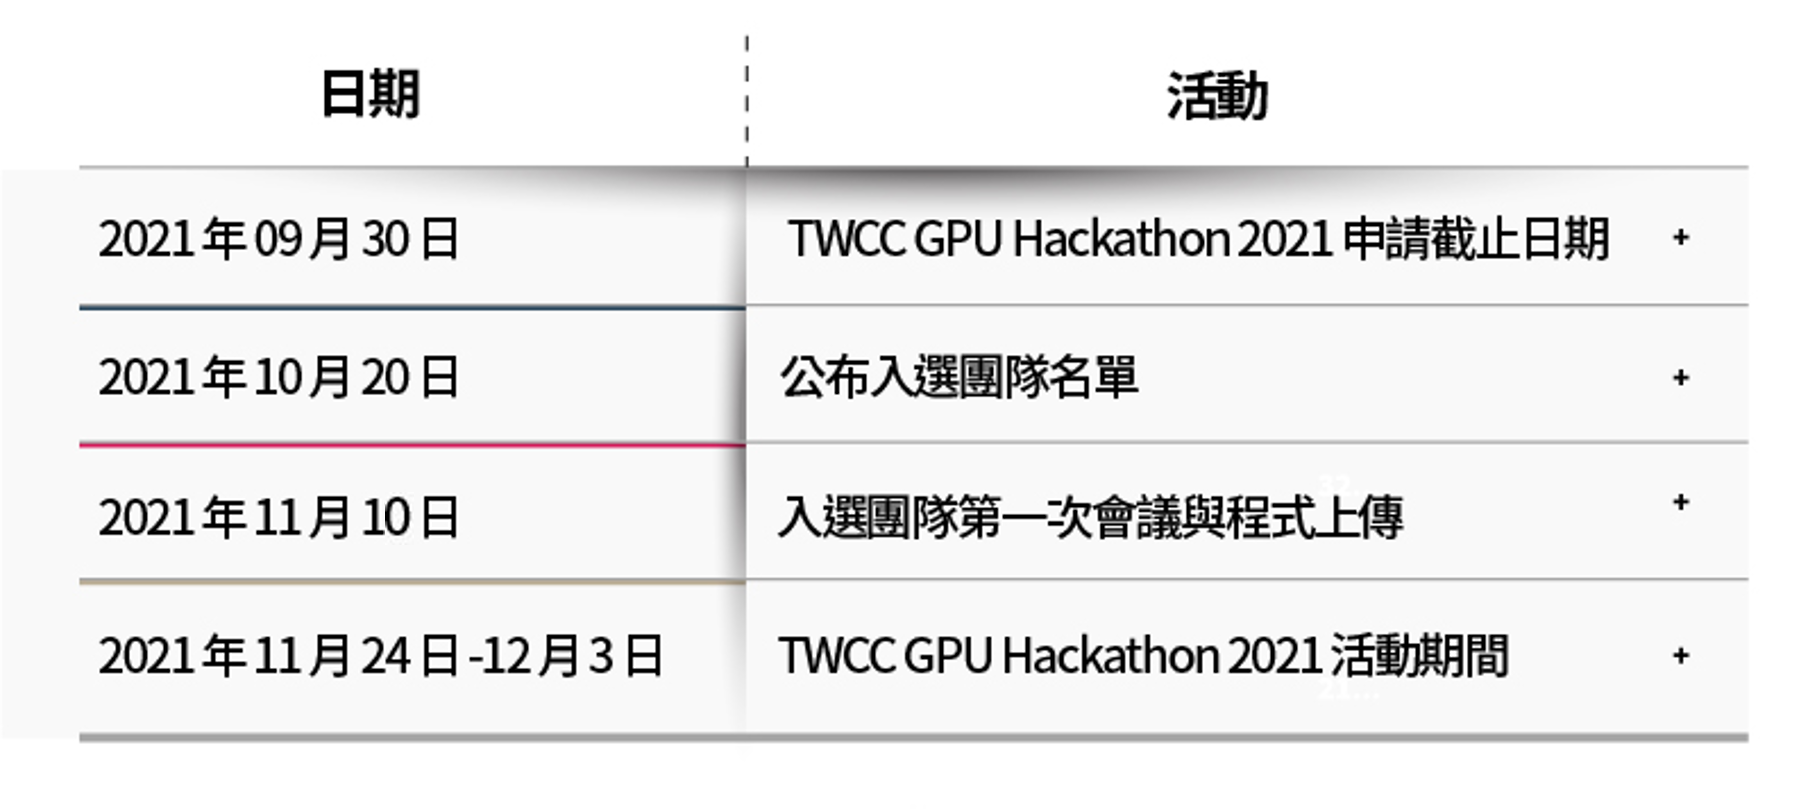 TWCC 臺灣AI雲 GPU Hackathon 2021__活動形式與重要行程